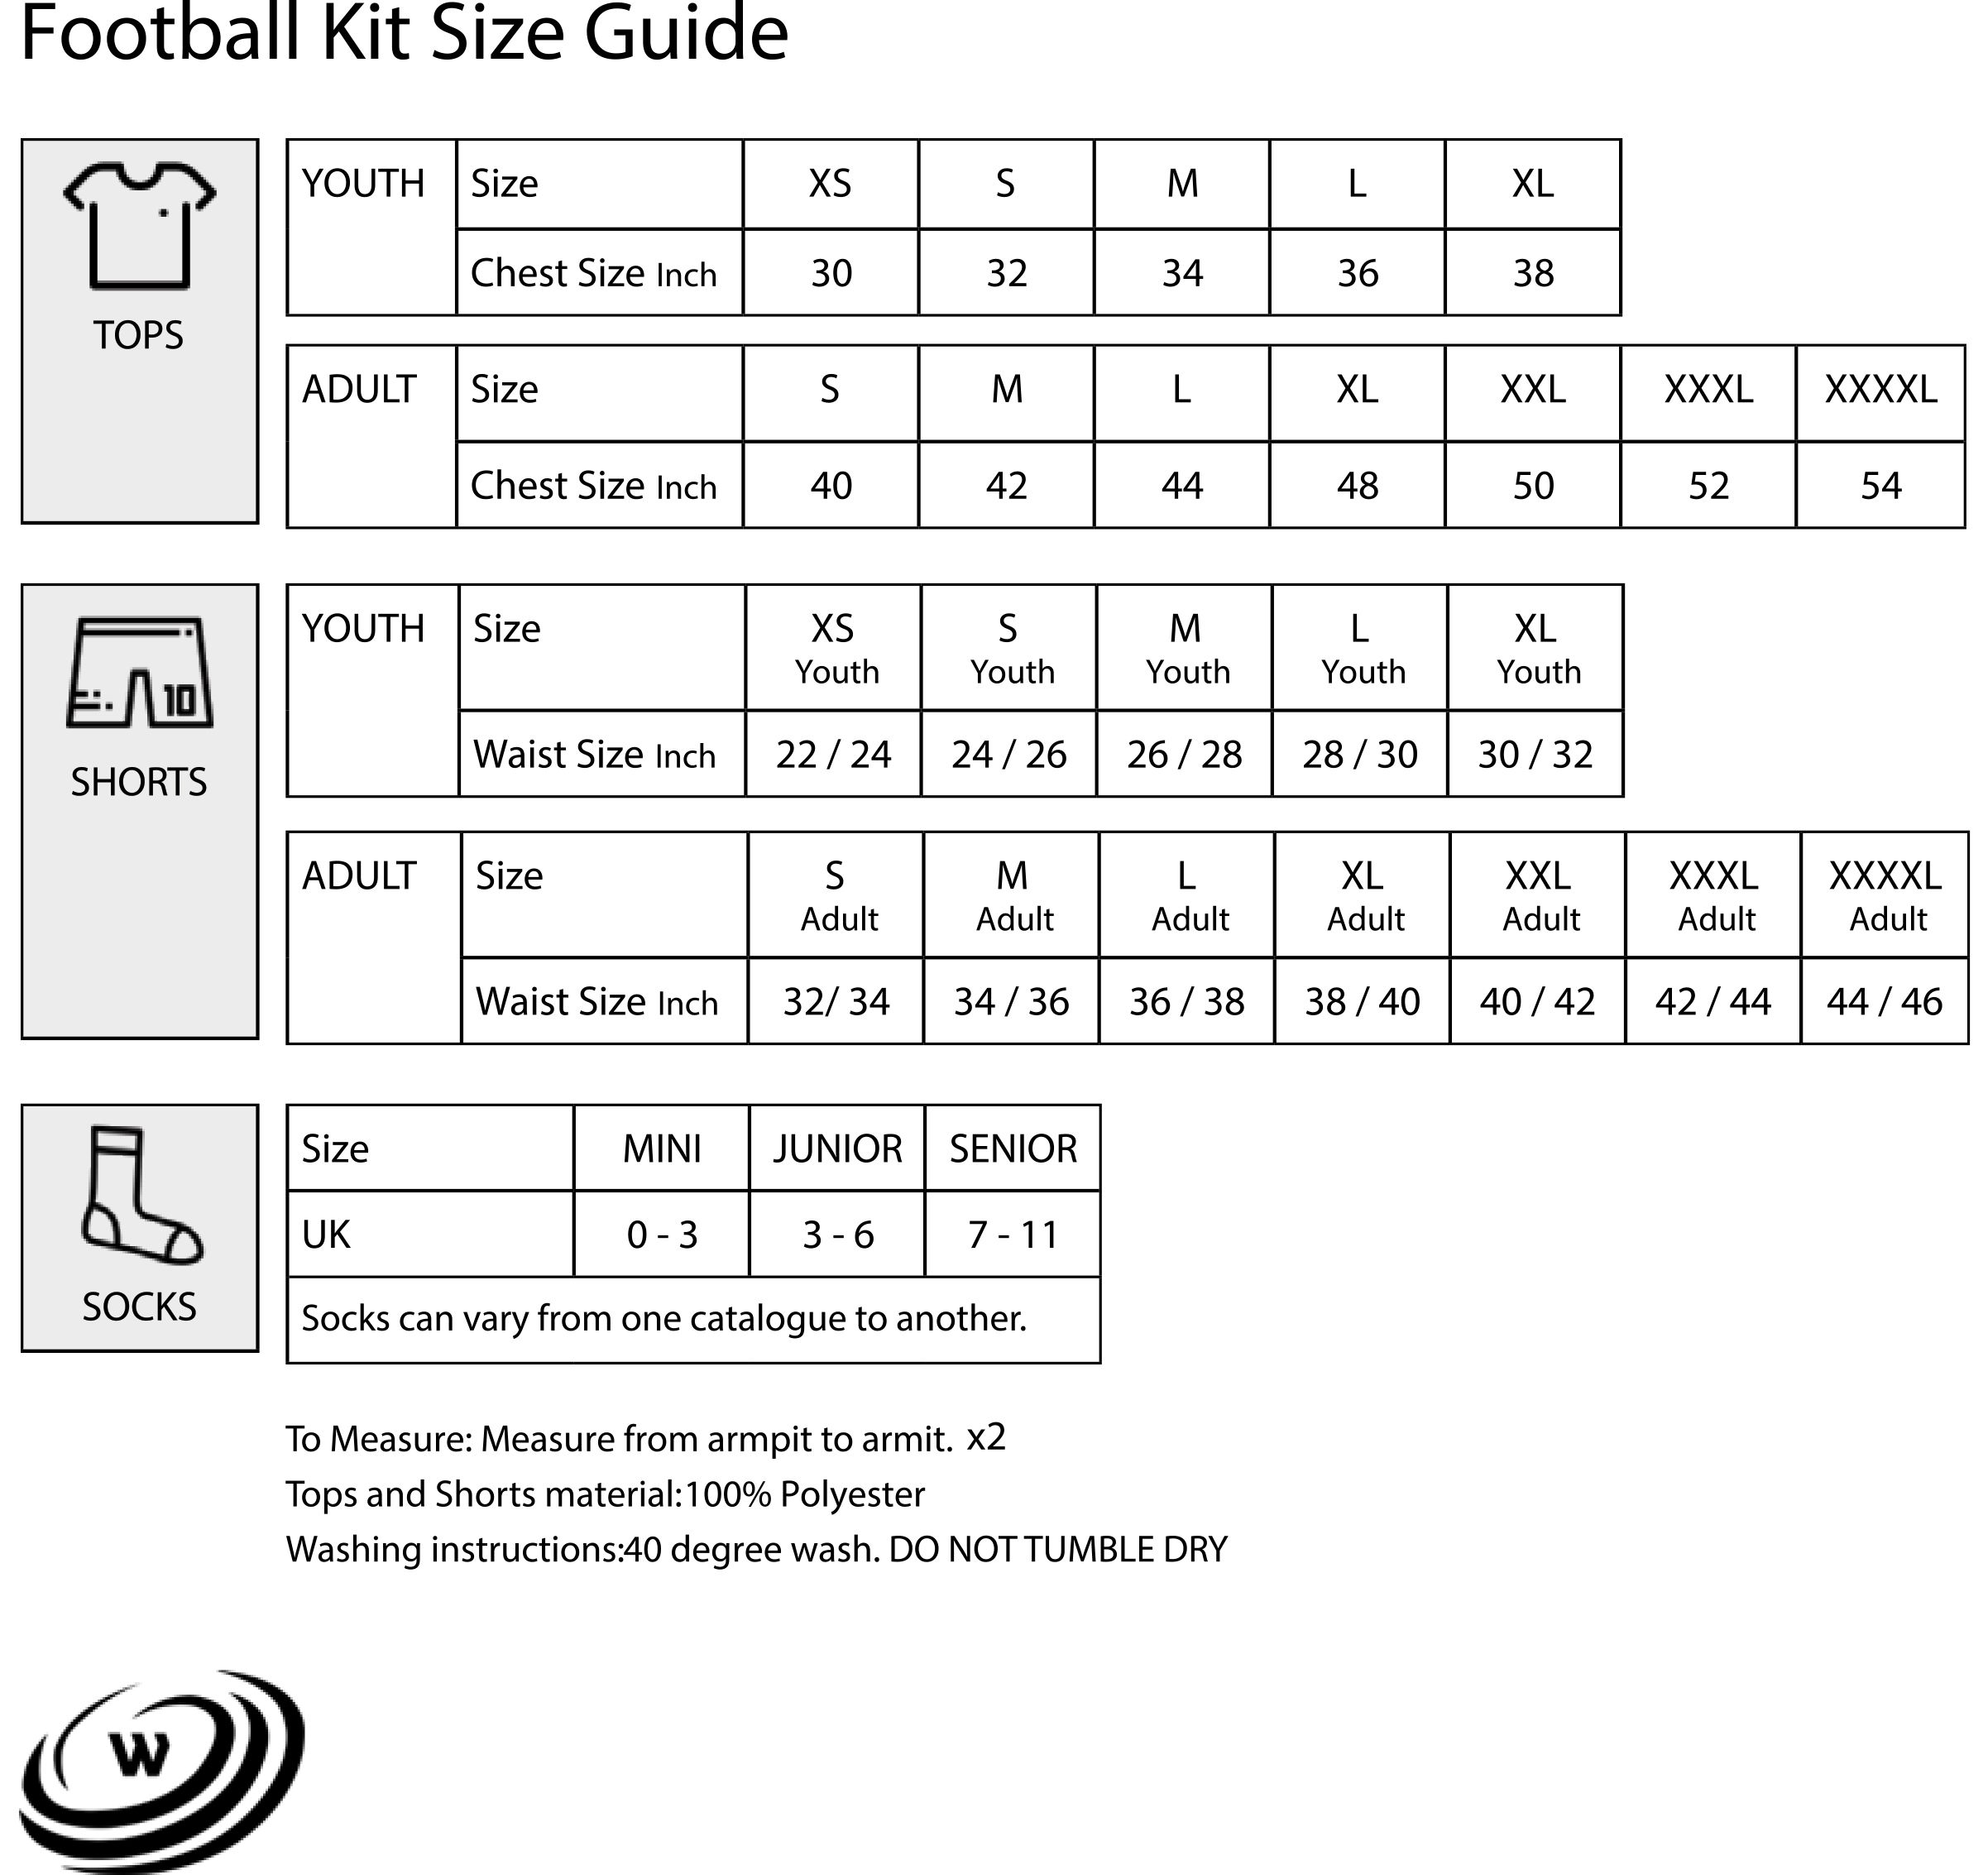 Football sizes